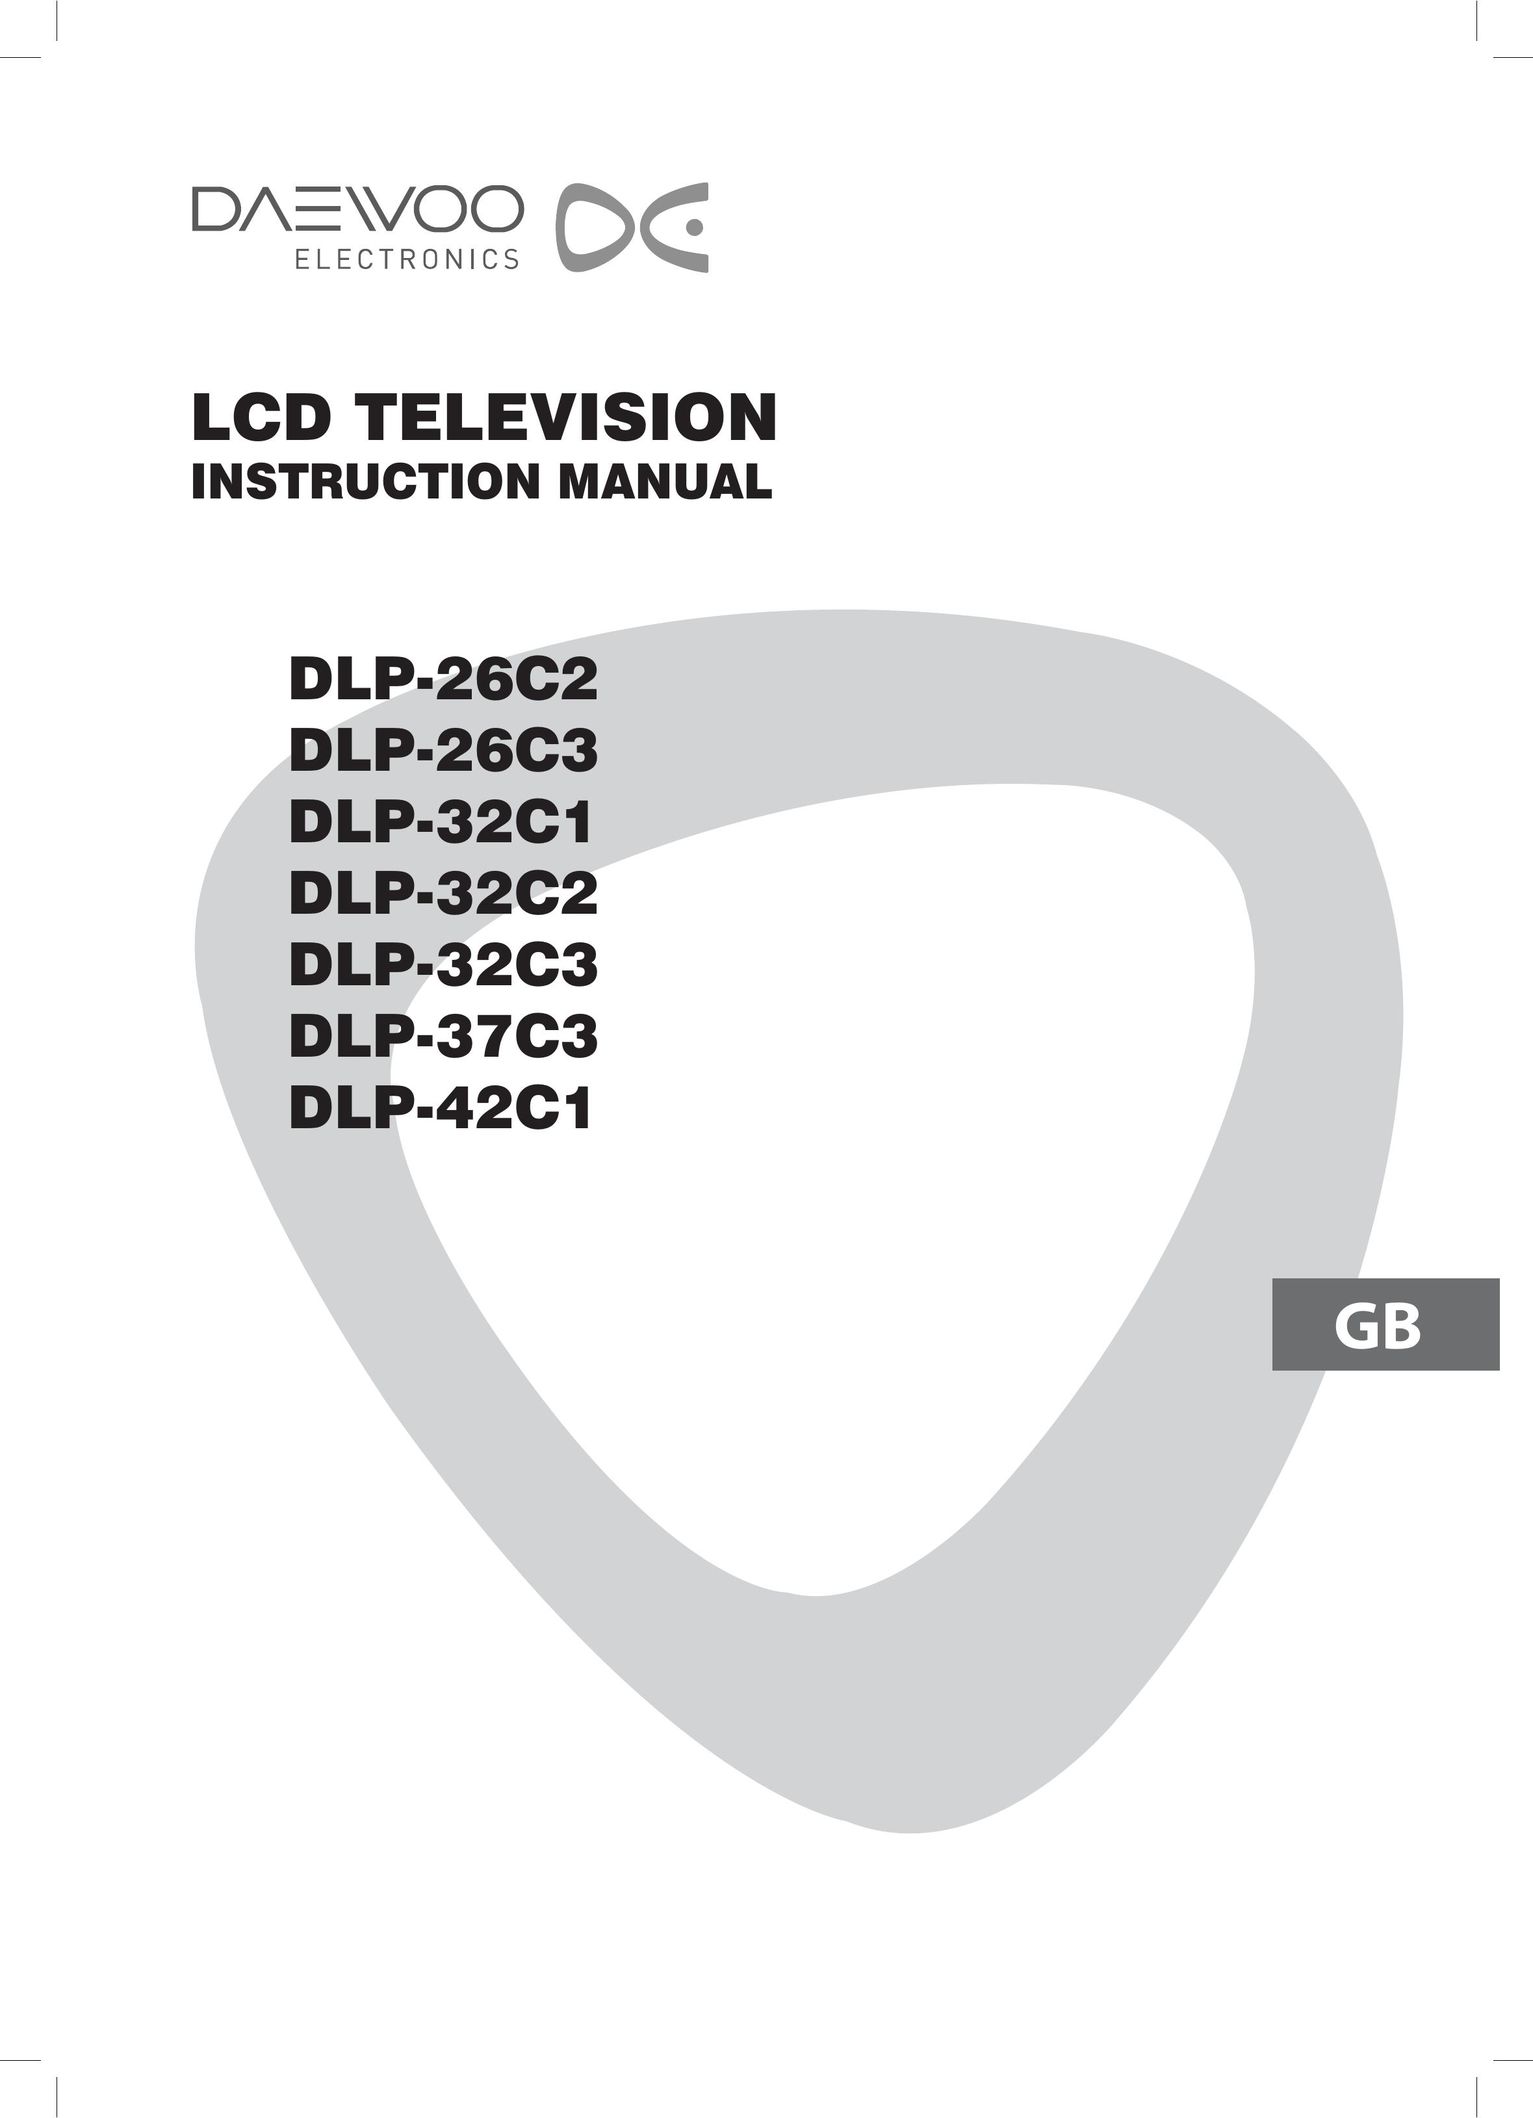 Daewoo DLP-42C1 Flat Panel Television User Manual